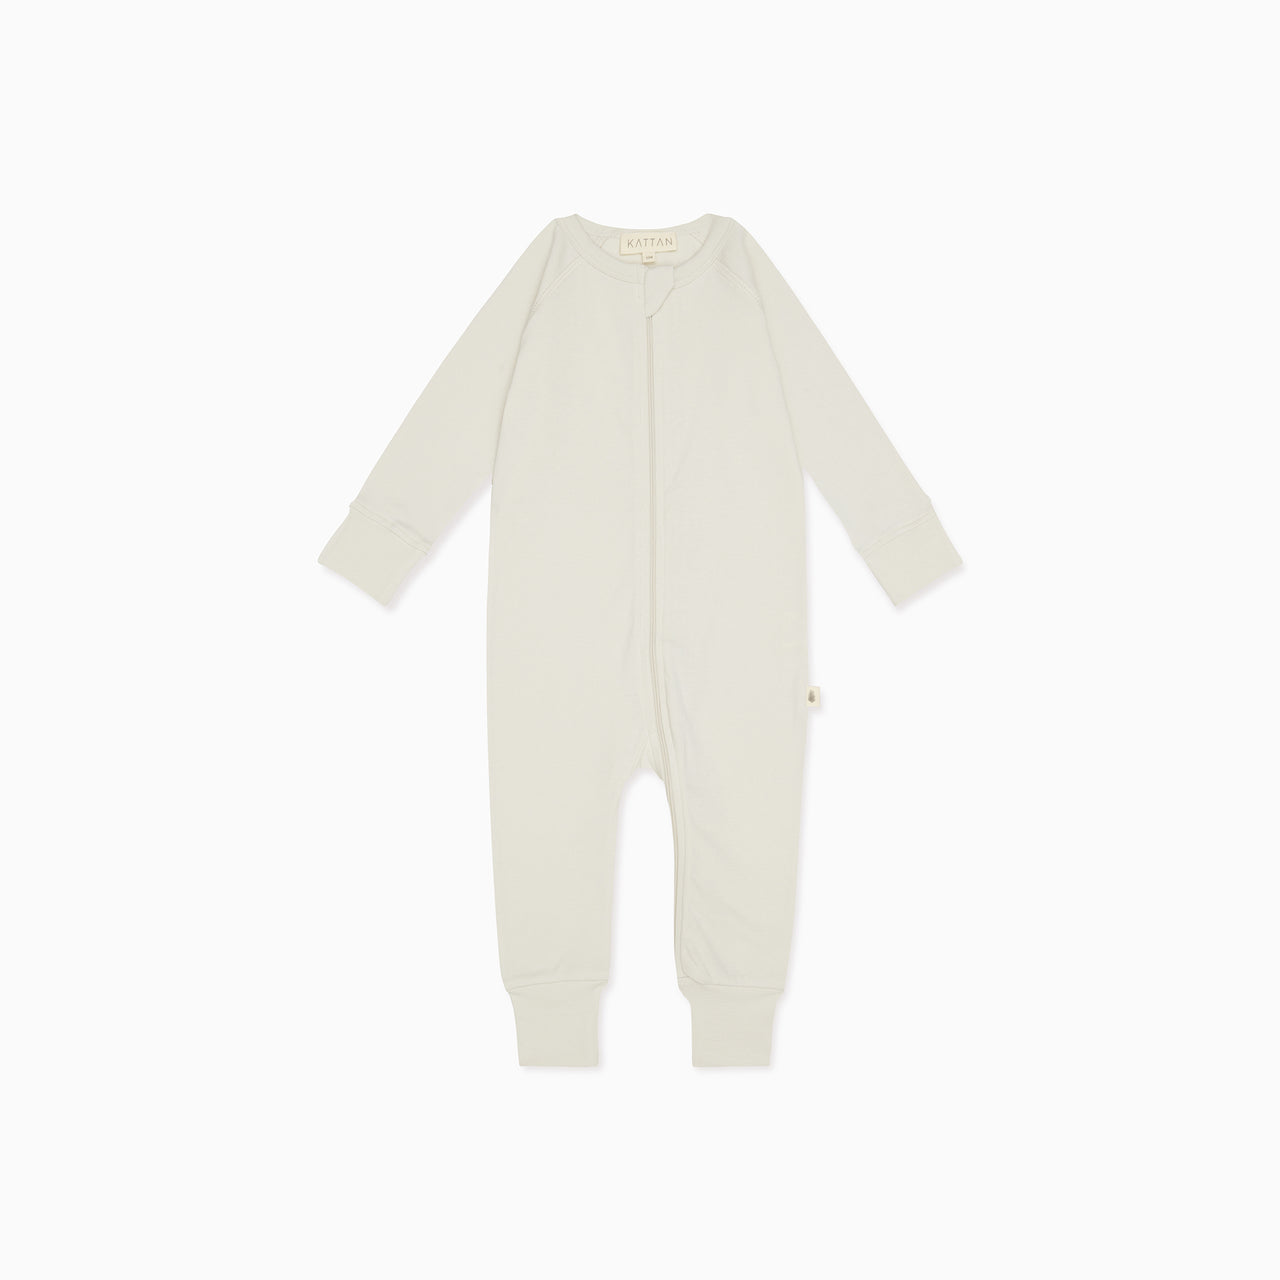 Baby toddler organic cotton onesie sleepsuit